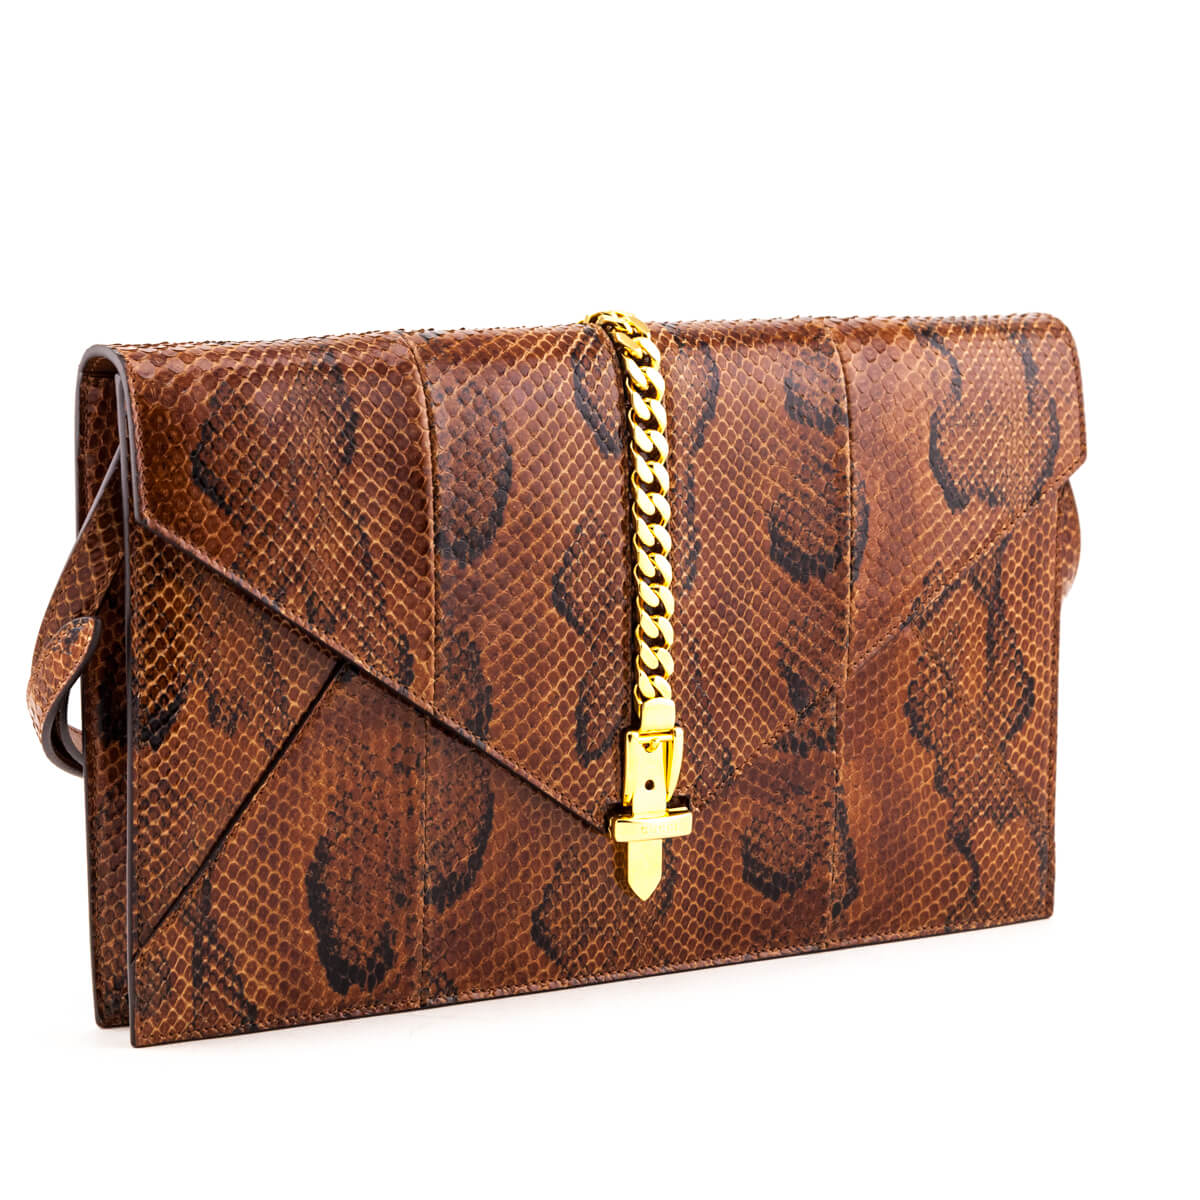 Gucci Brown Python Sylvie 1969 Shoulder Bag - Love that Bag etc - Preowned Authentic Designer Handbags & Preloved Fashions